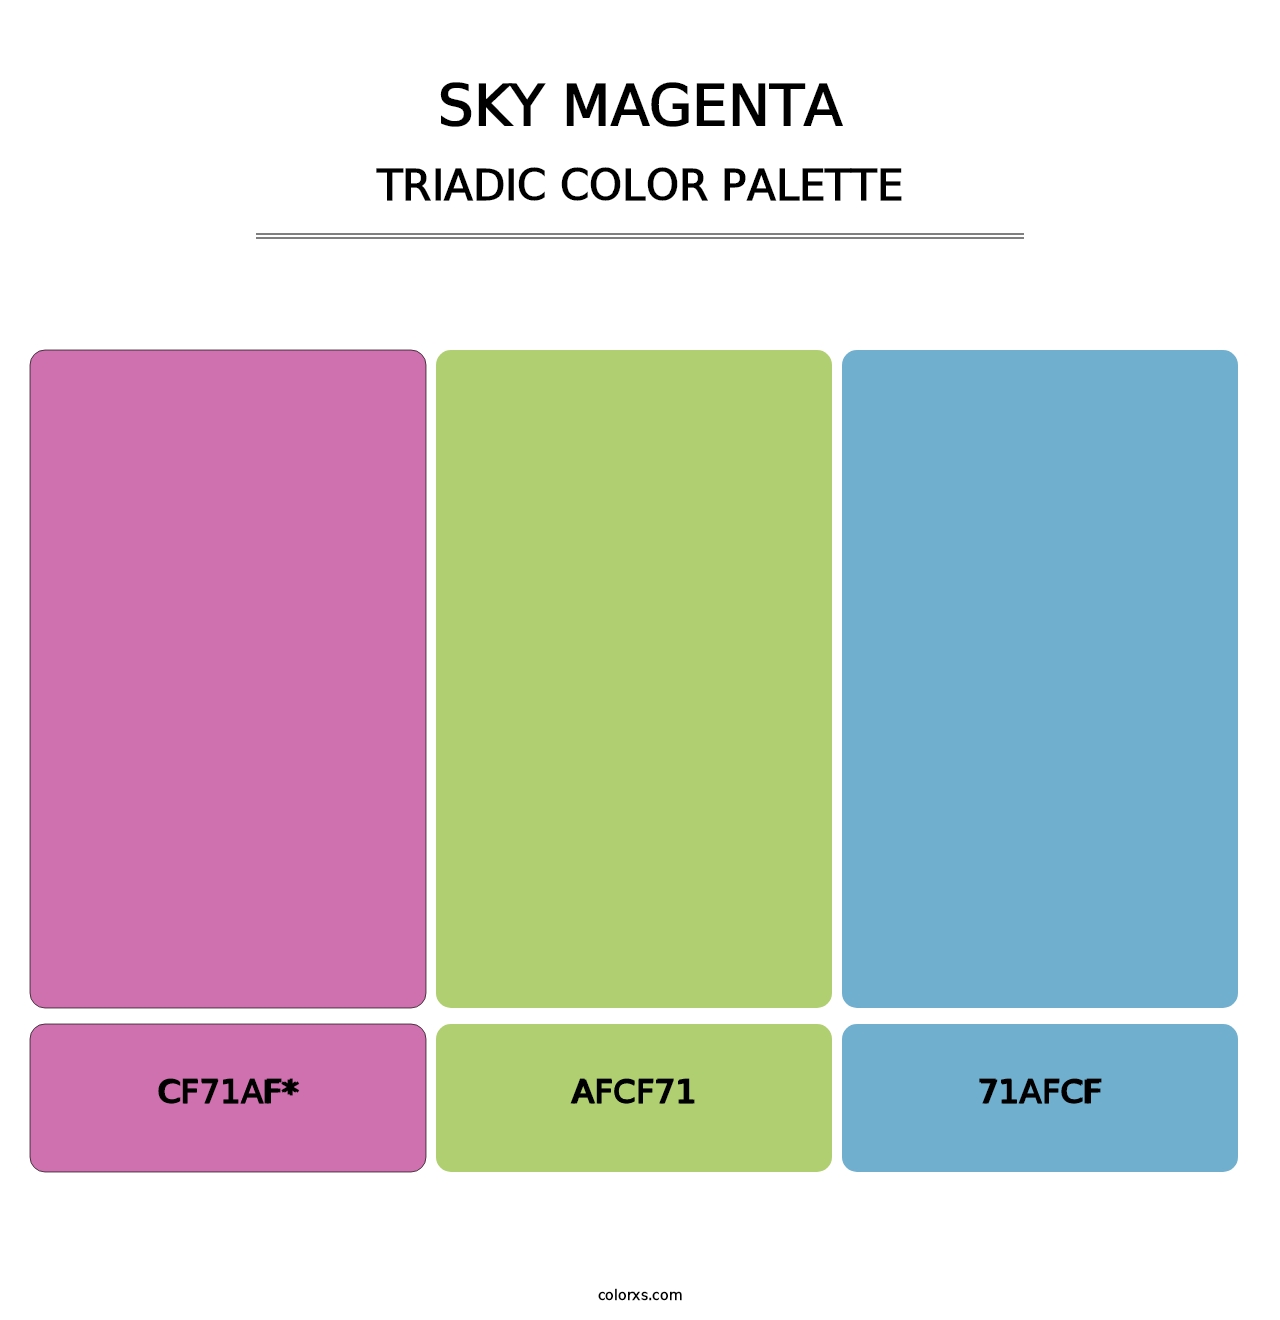 Sky Magenta - Triadic Color Palette